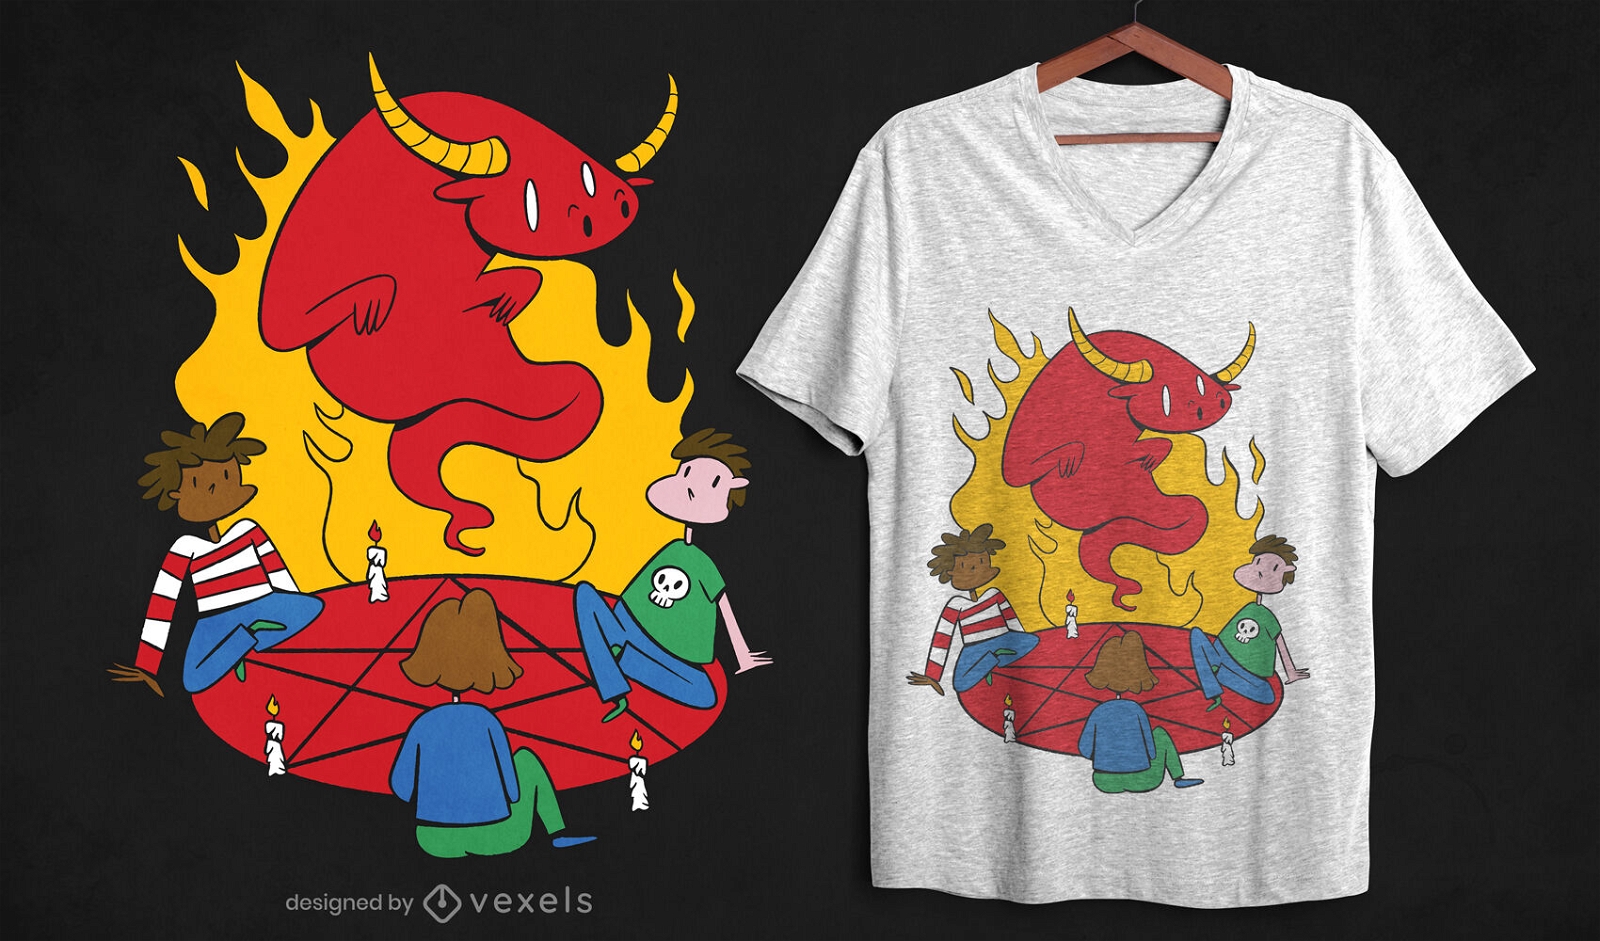 Kids in cult devil t-shirt design